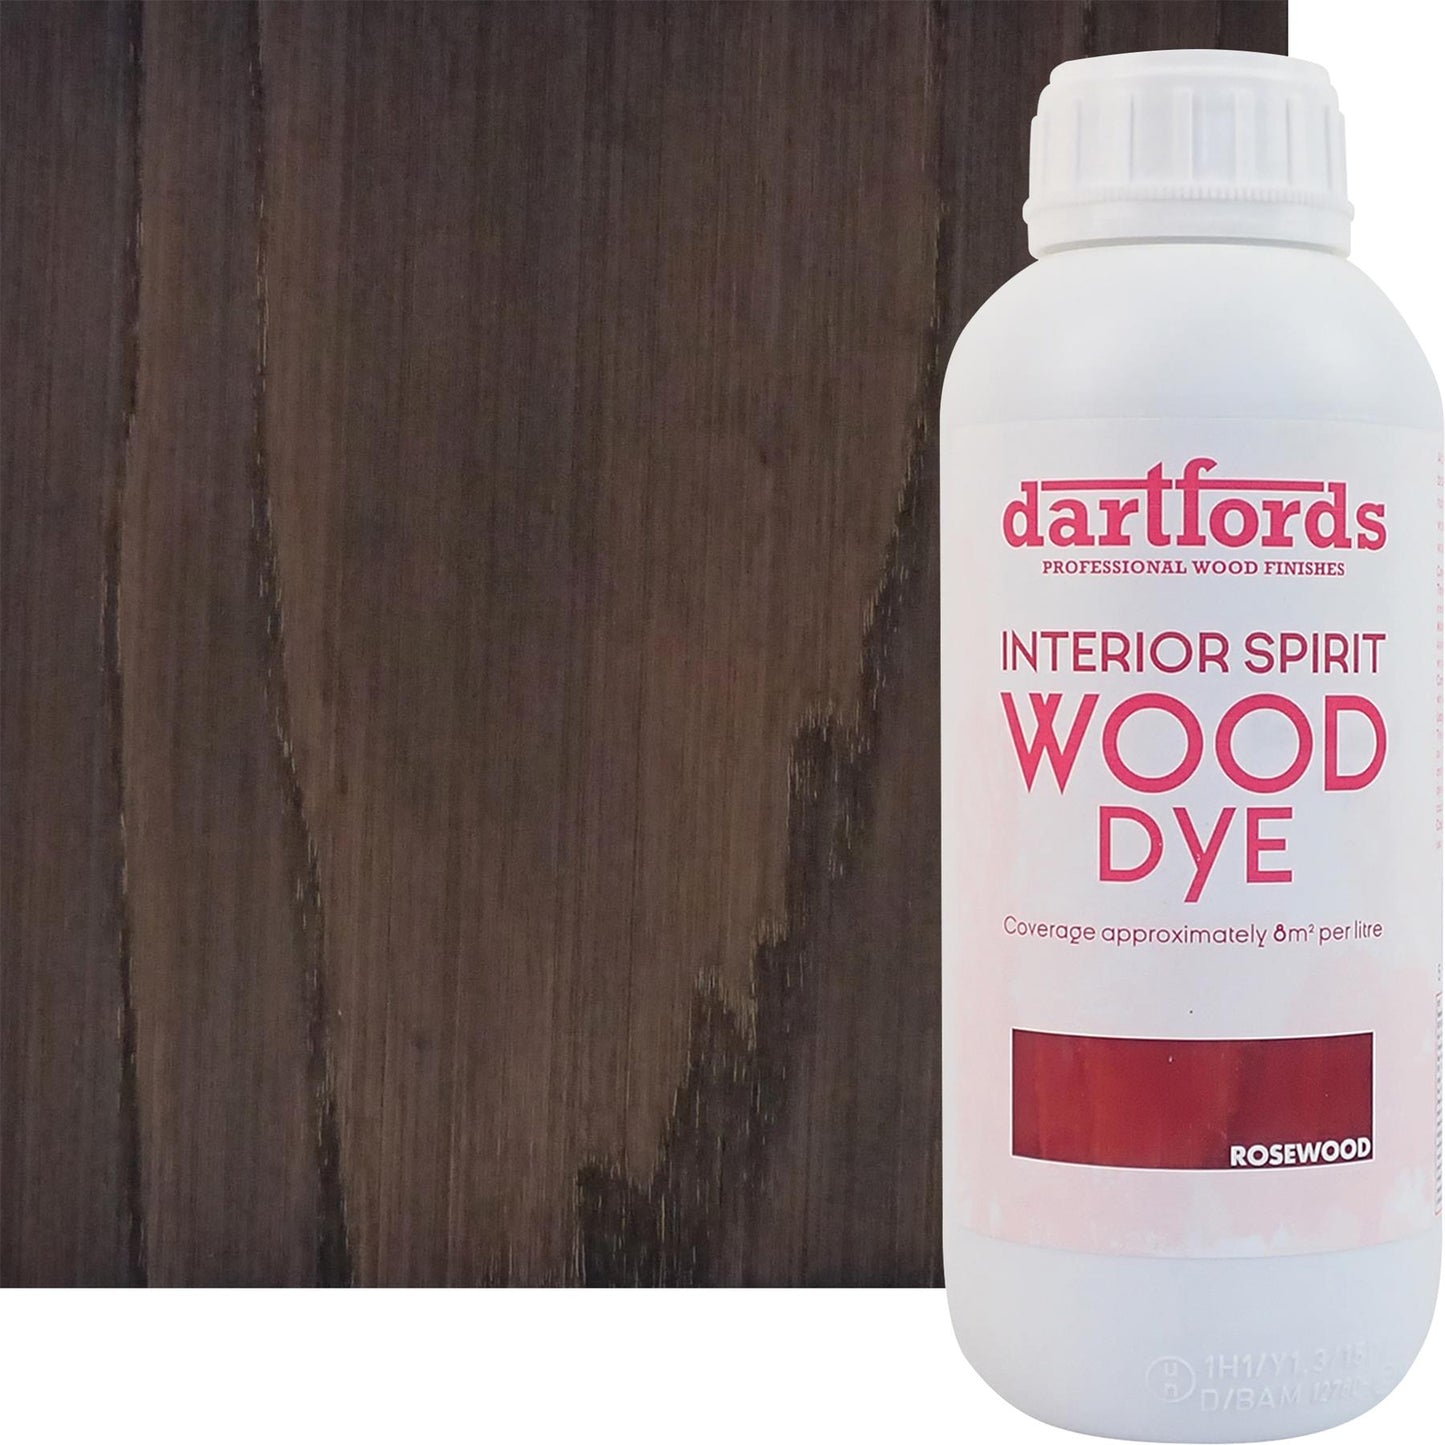 dartfords Rosewood Interior Spirit Based Wood Dye - 1 litre Tin